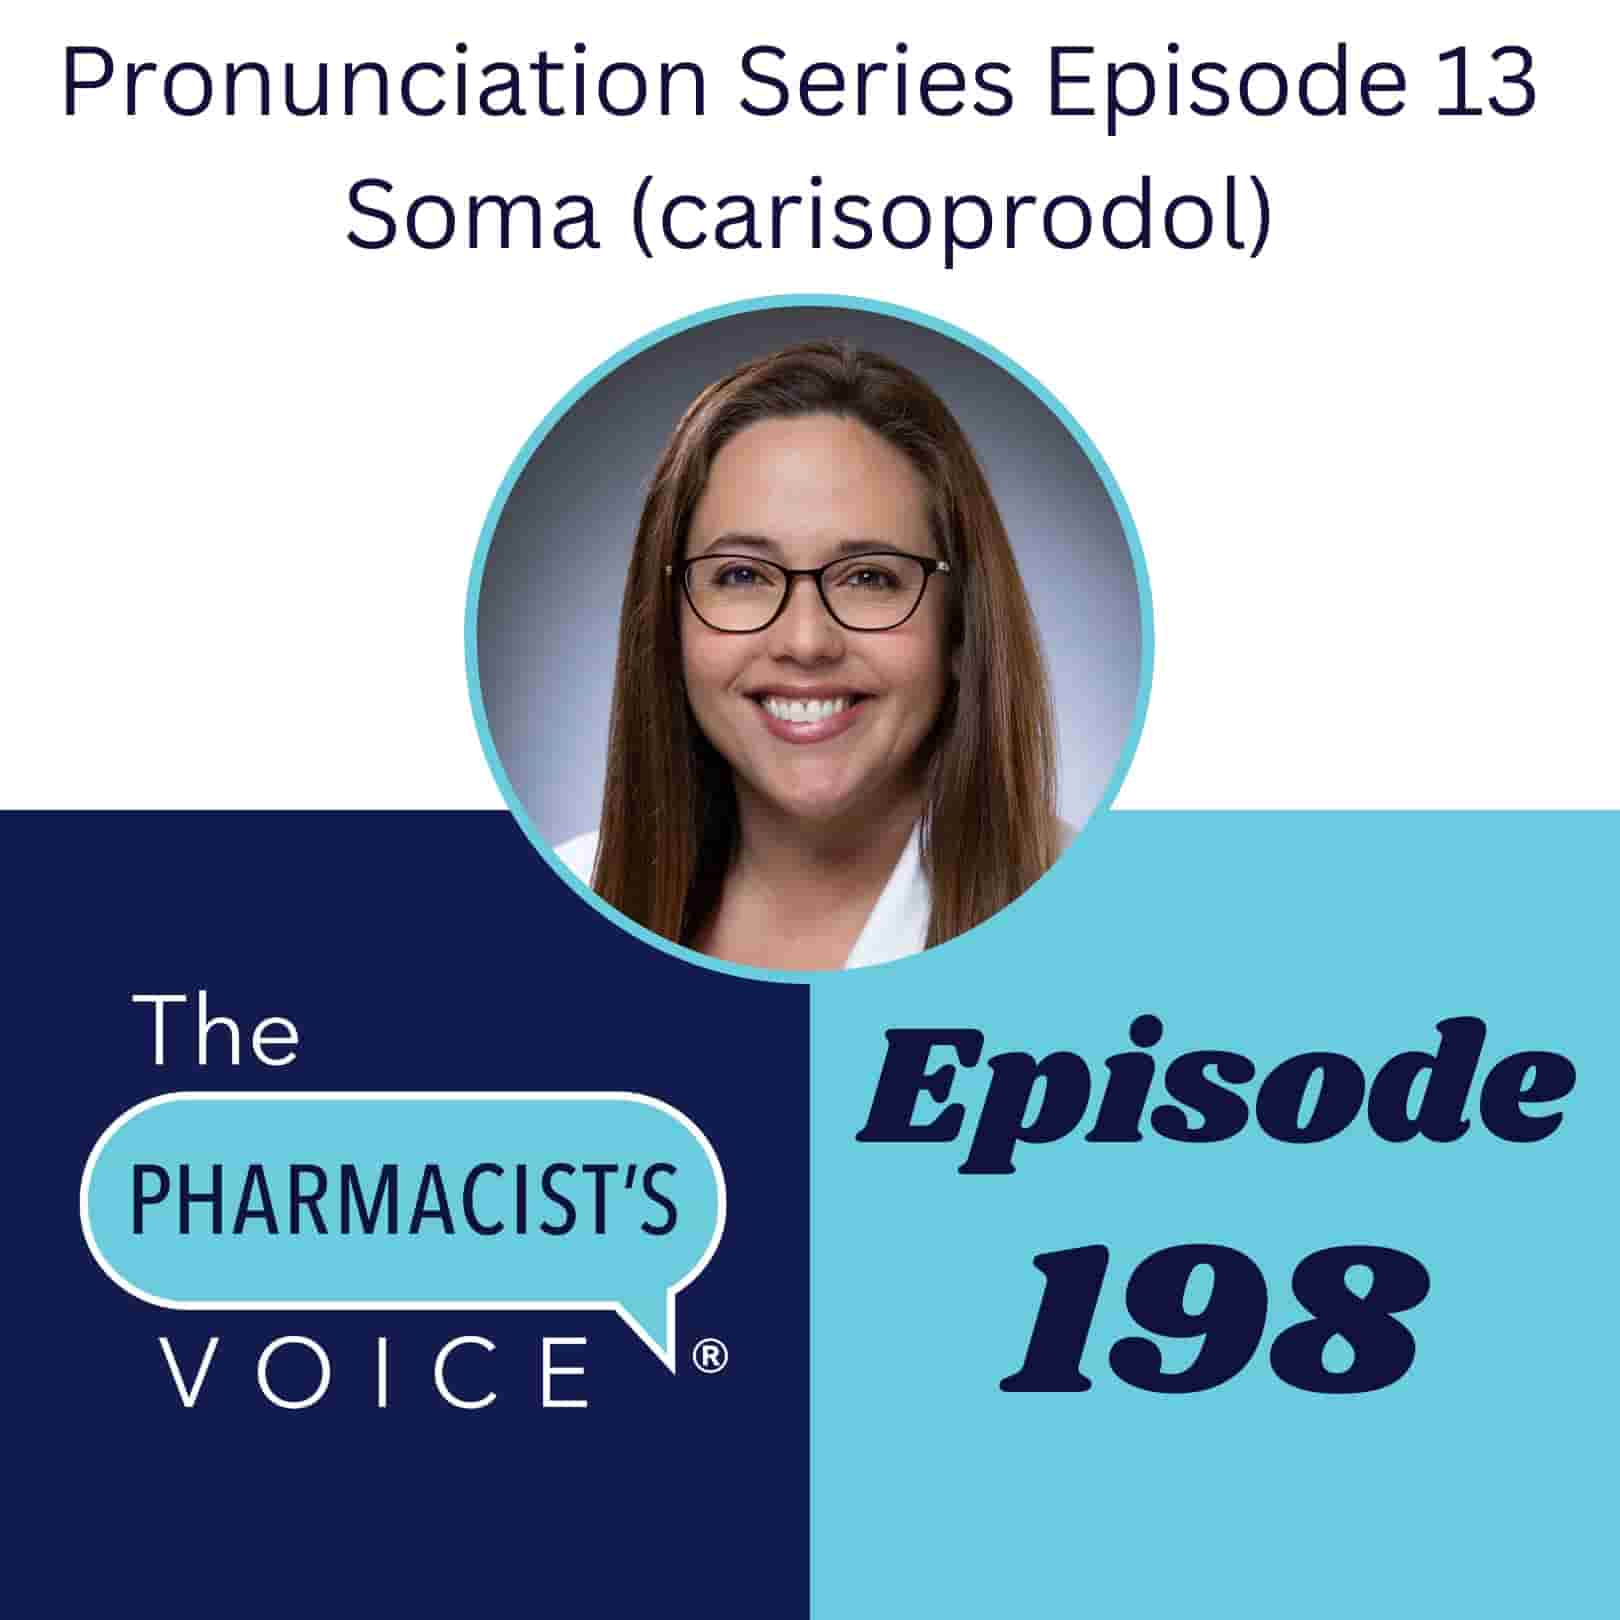 artwork for The Pharmacist's Voice Podcast episode 198. To learn more, visit https://www.thepharmacistsvoice.com